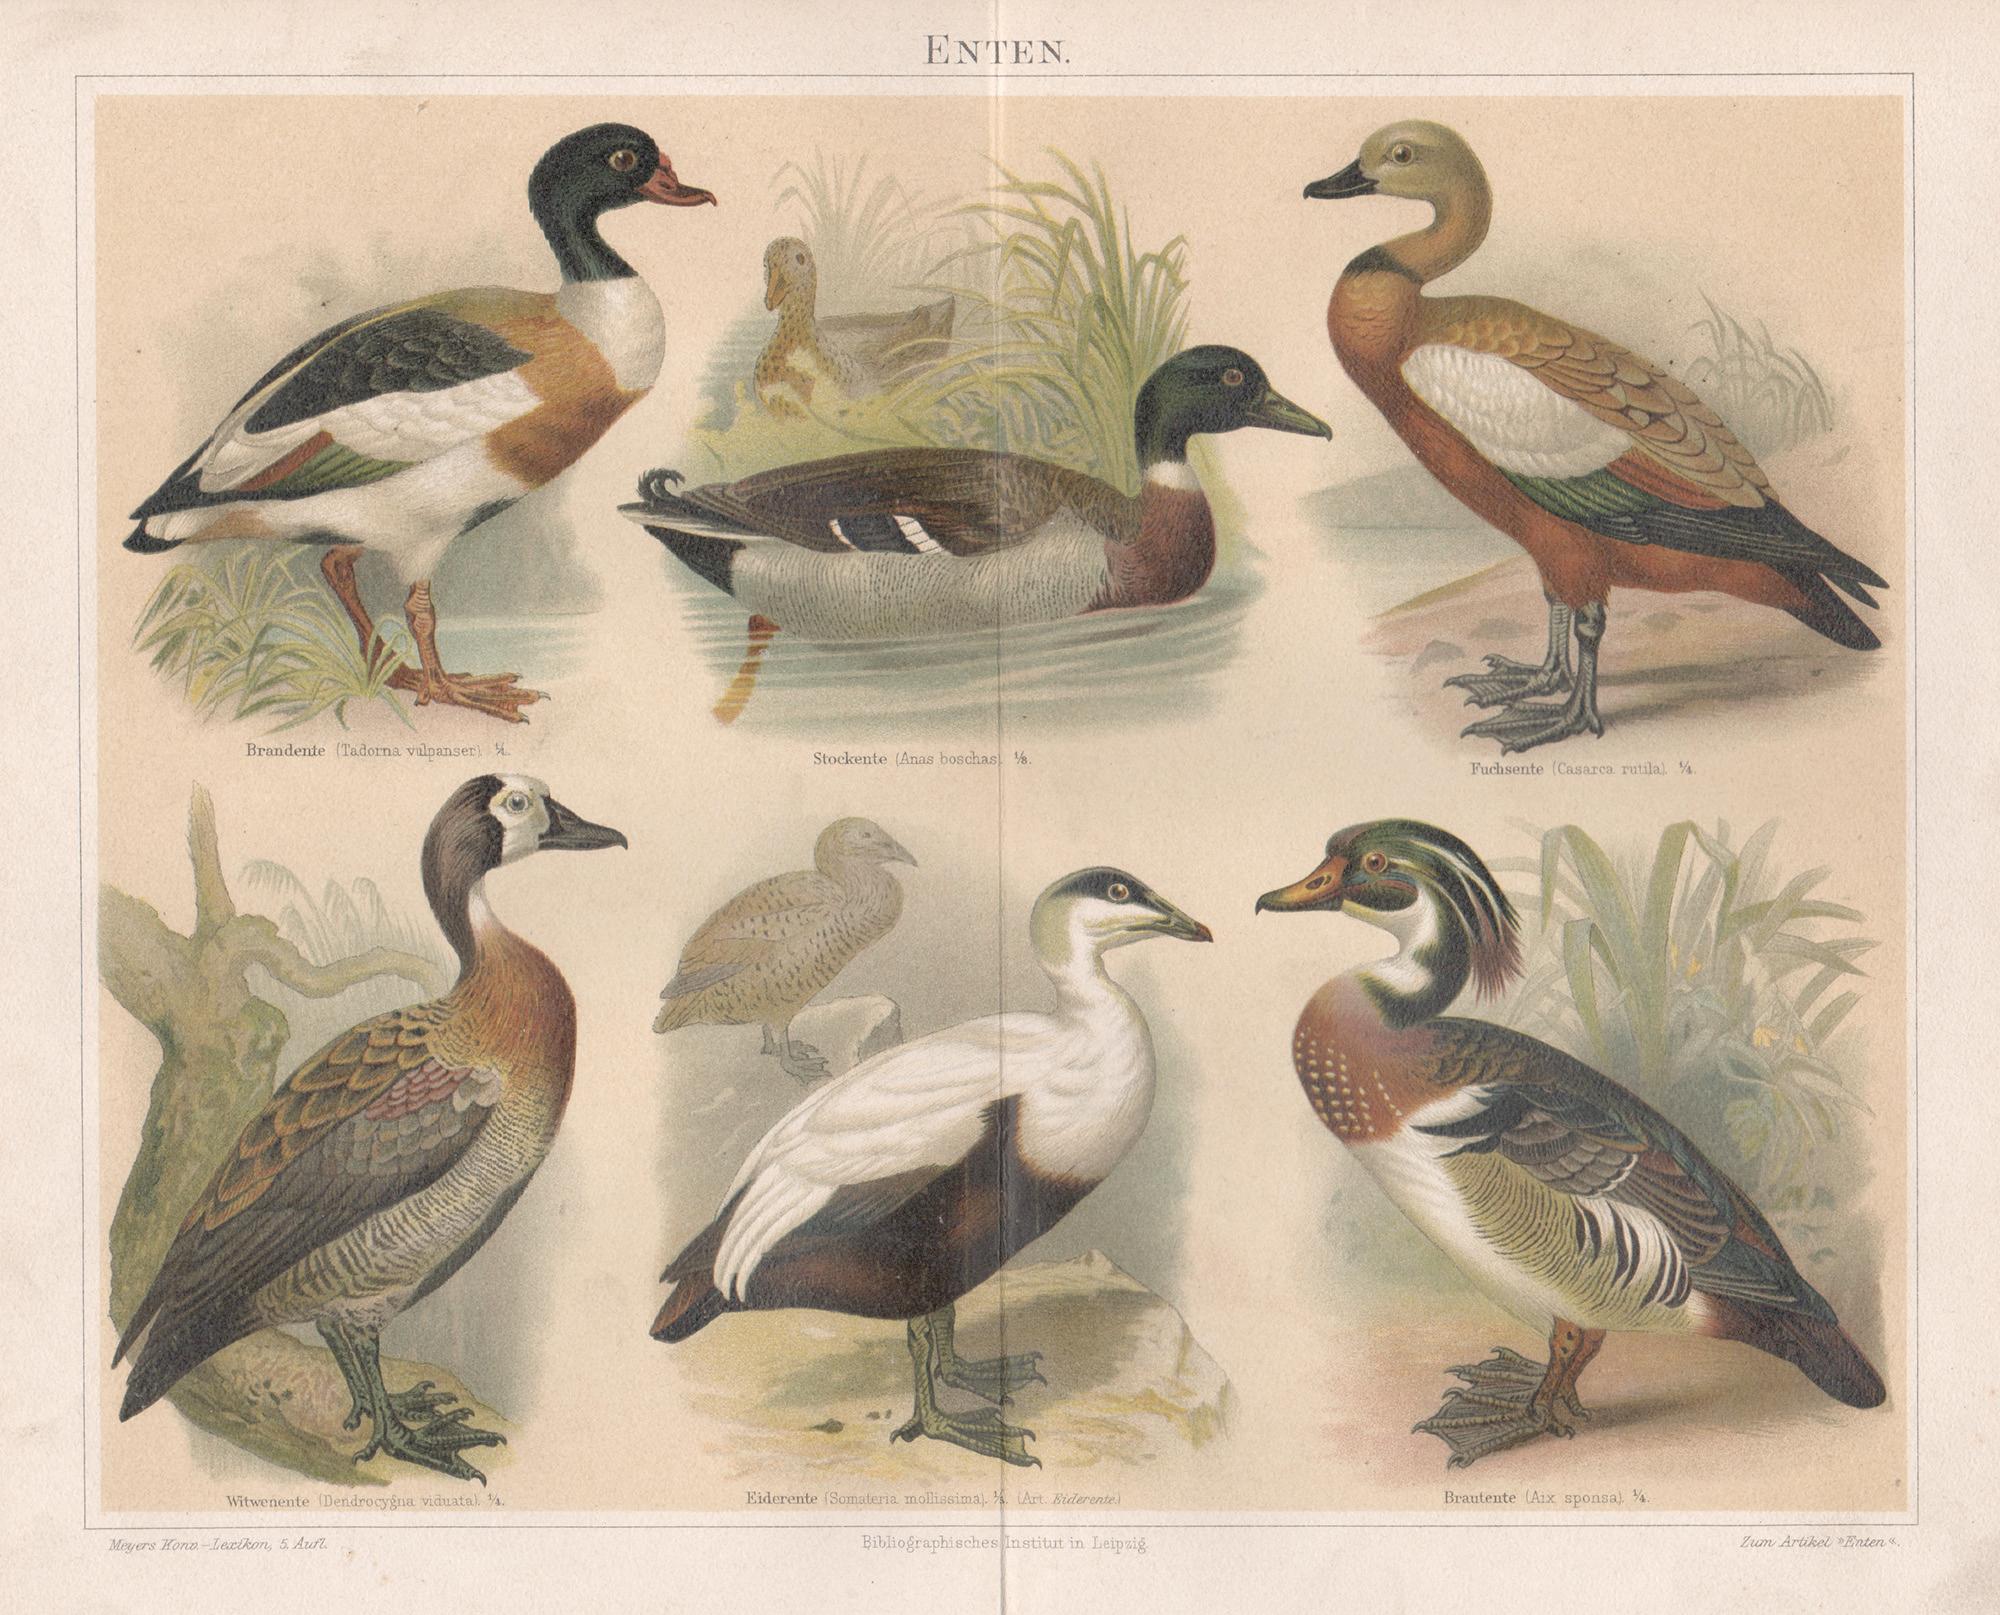 Unknown Print - Enten (Ducks), German antique bird chromolithograph